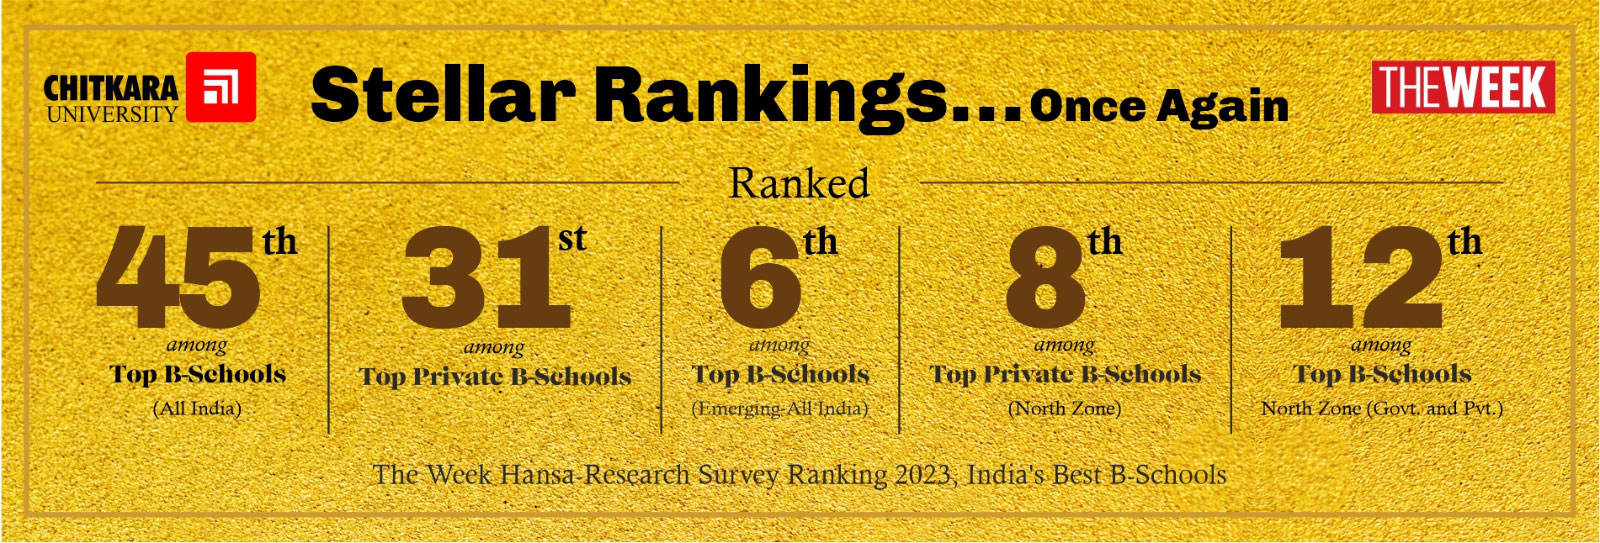 B-Schools Ranking - Chitkara University